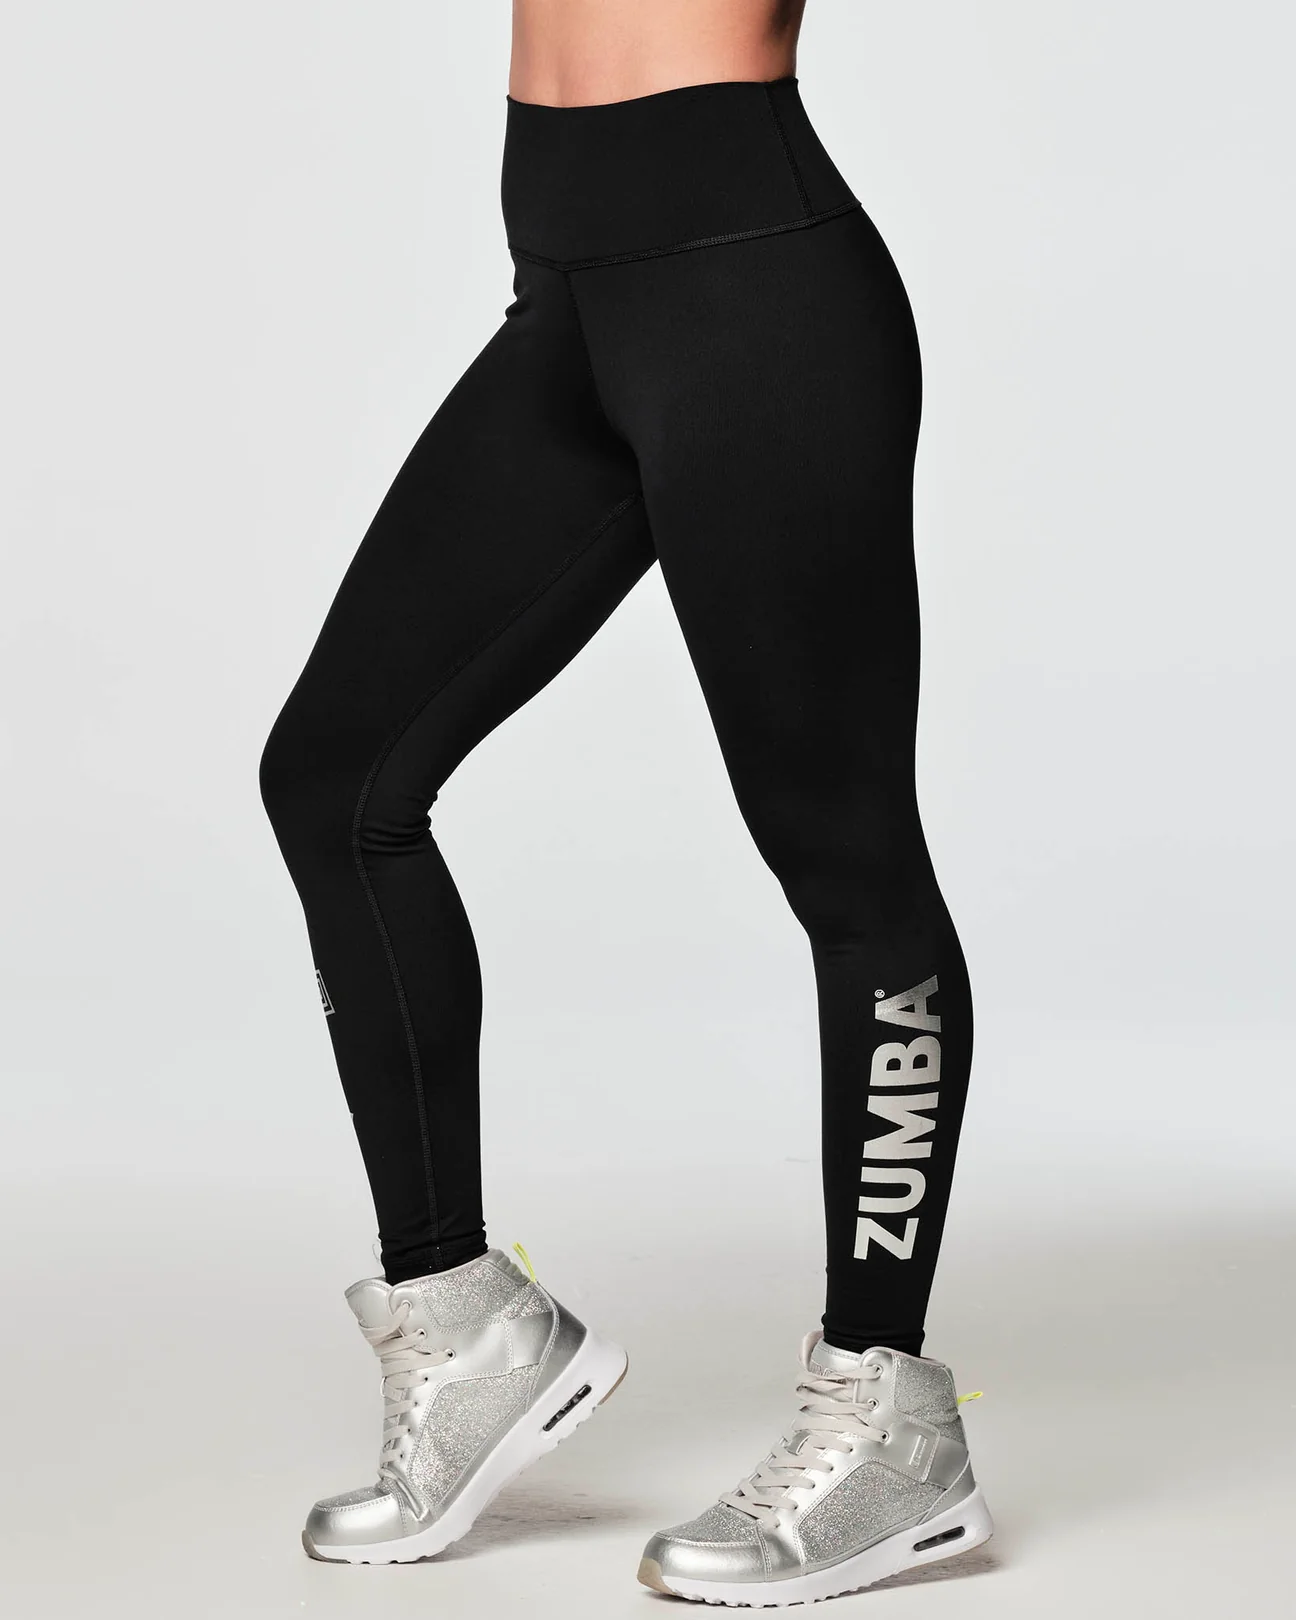 Zumba Glam Capri Leggings size XS & S - Bold Black